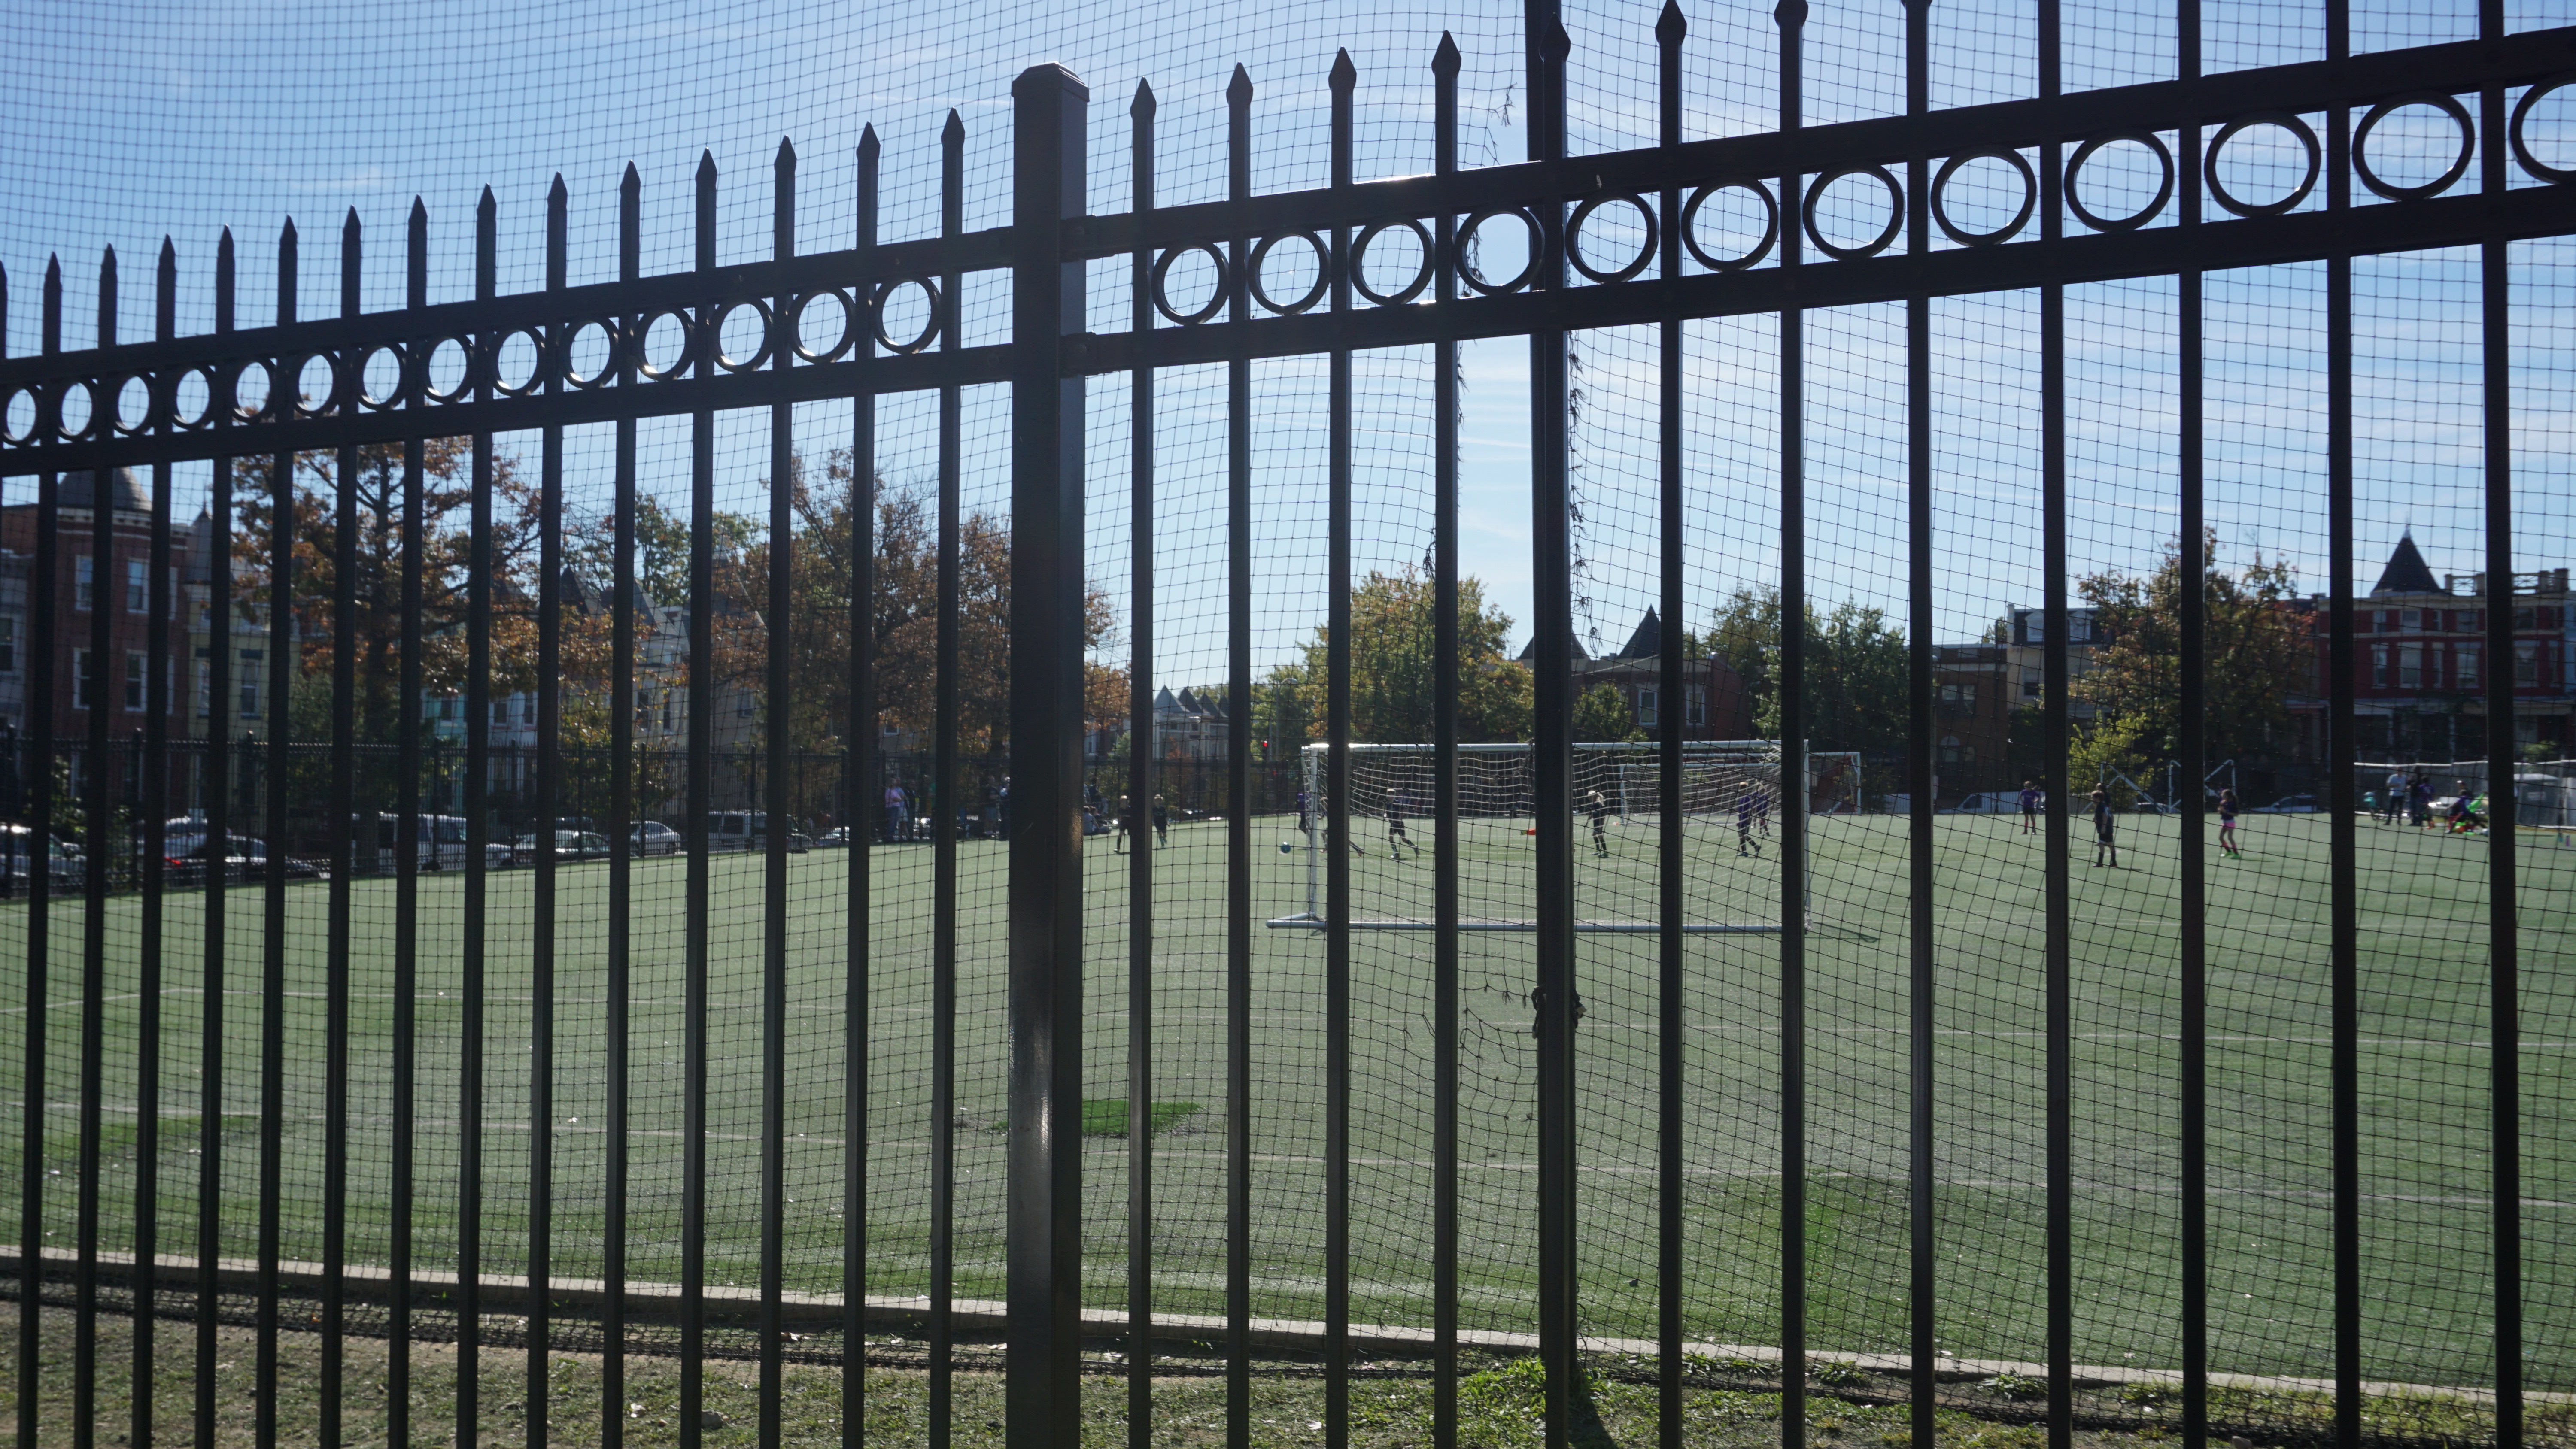 The soccer fields at Harriet Tubman Elementary School in Washington, D.C.